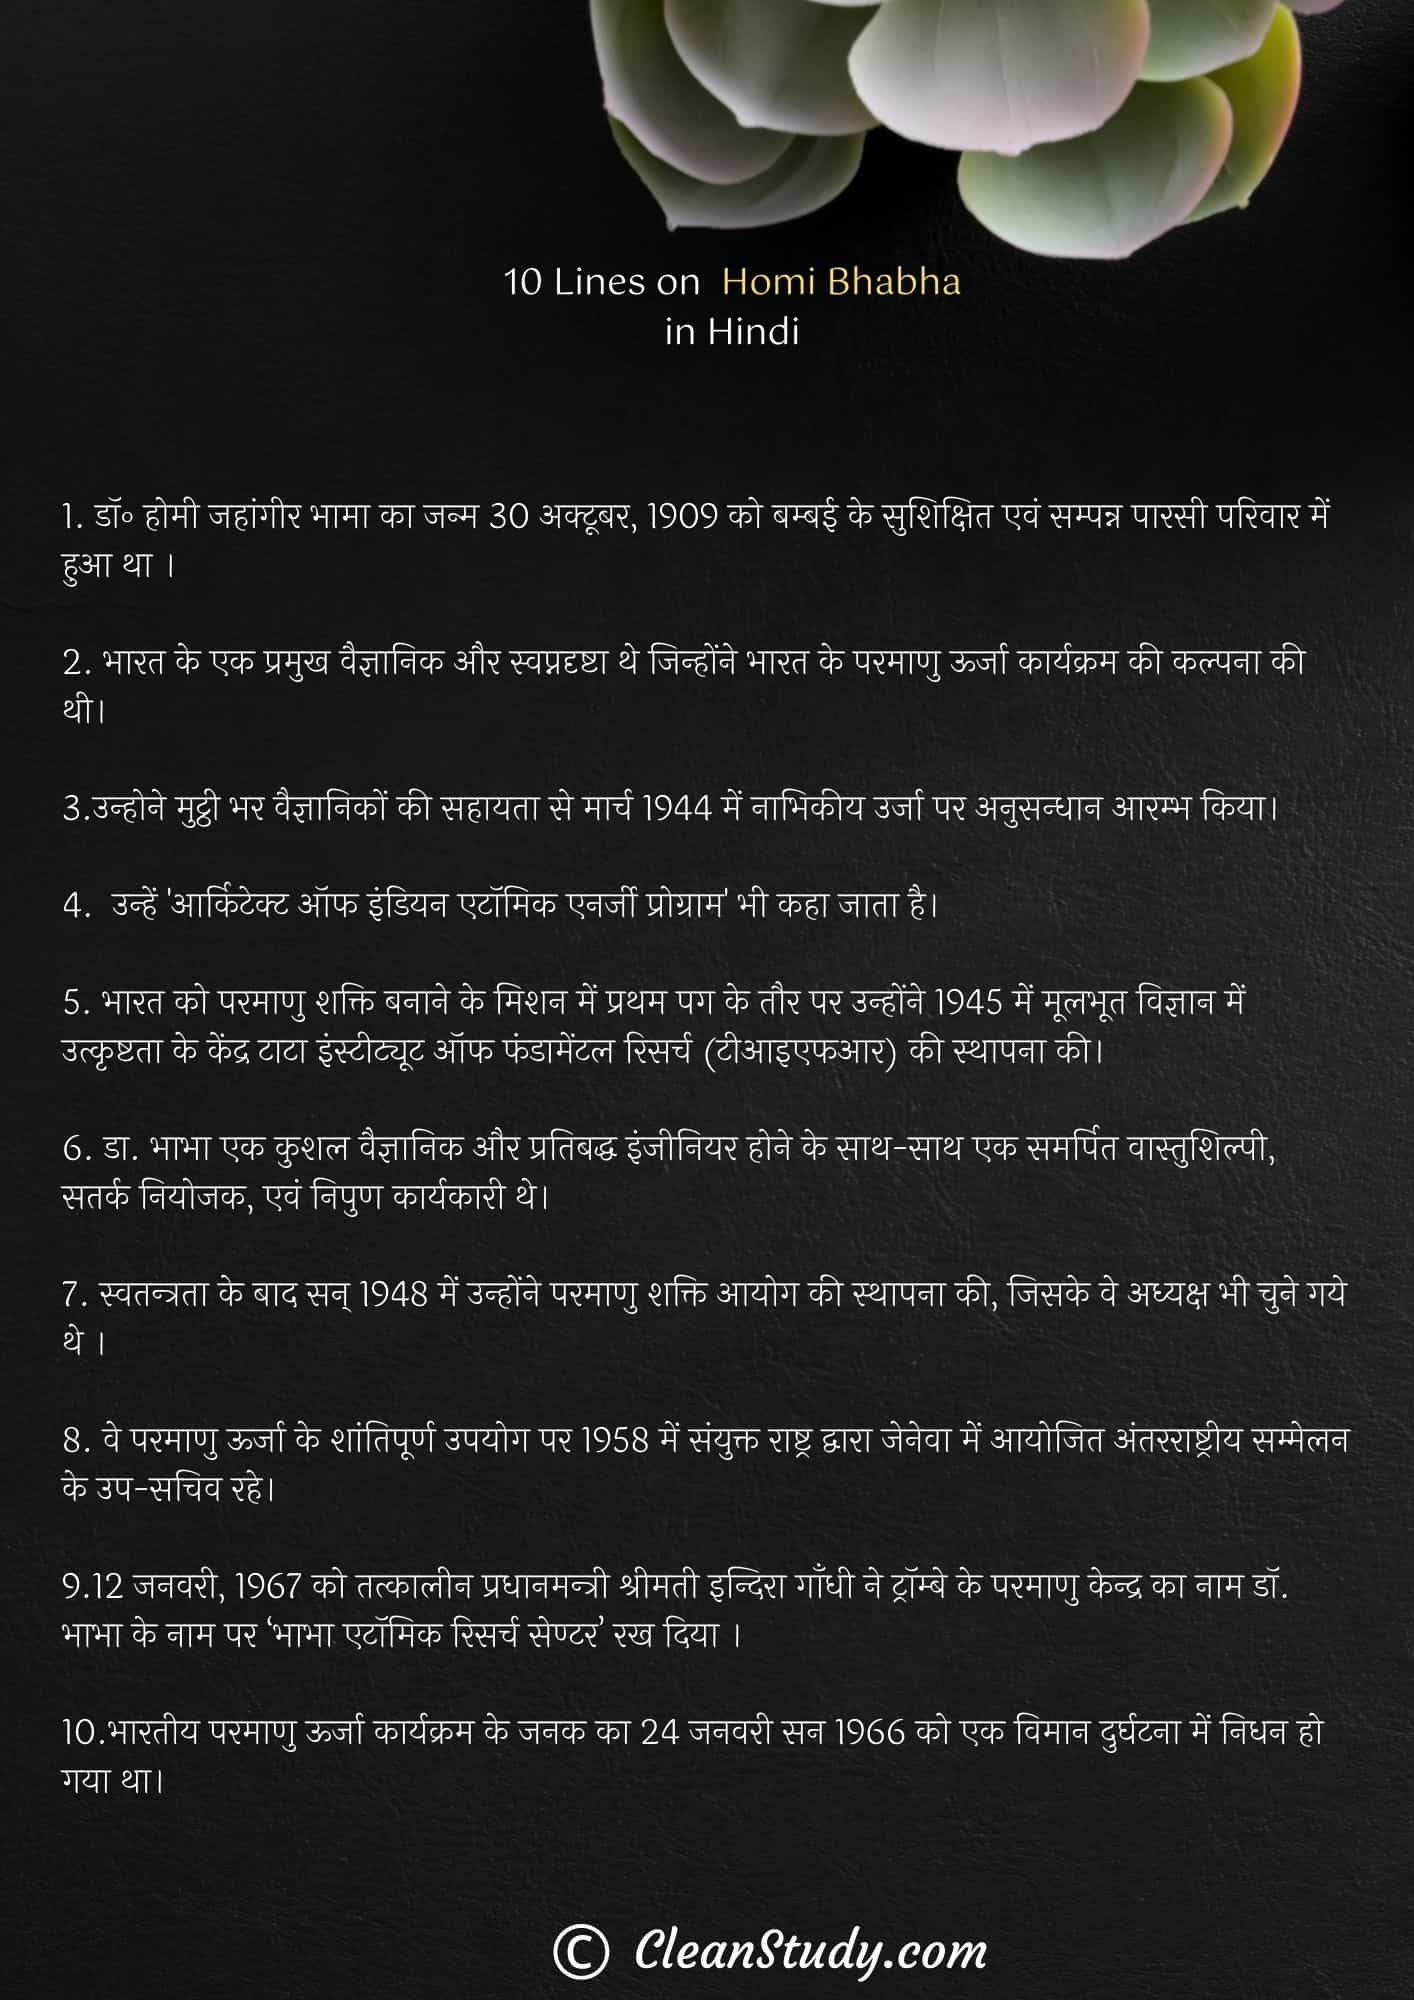 10 Lines on Homi Bhabha in Hindi